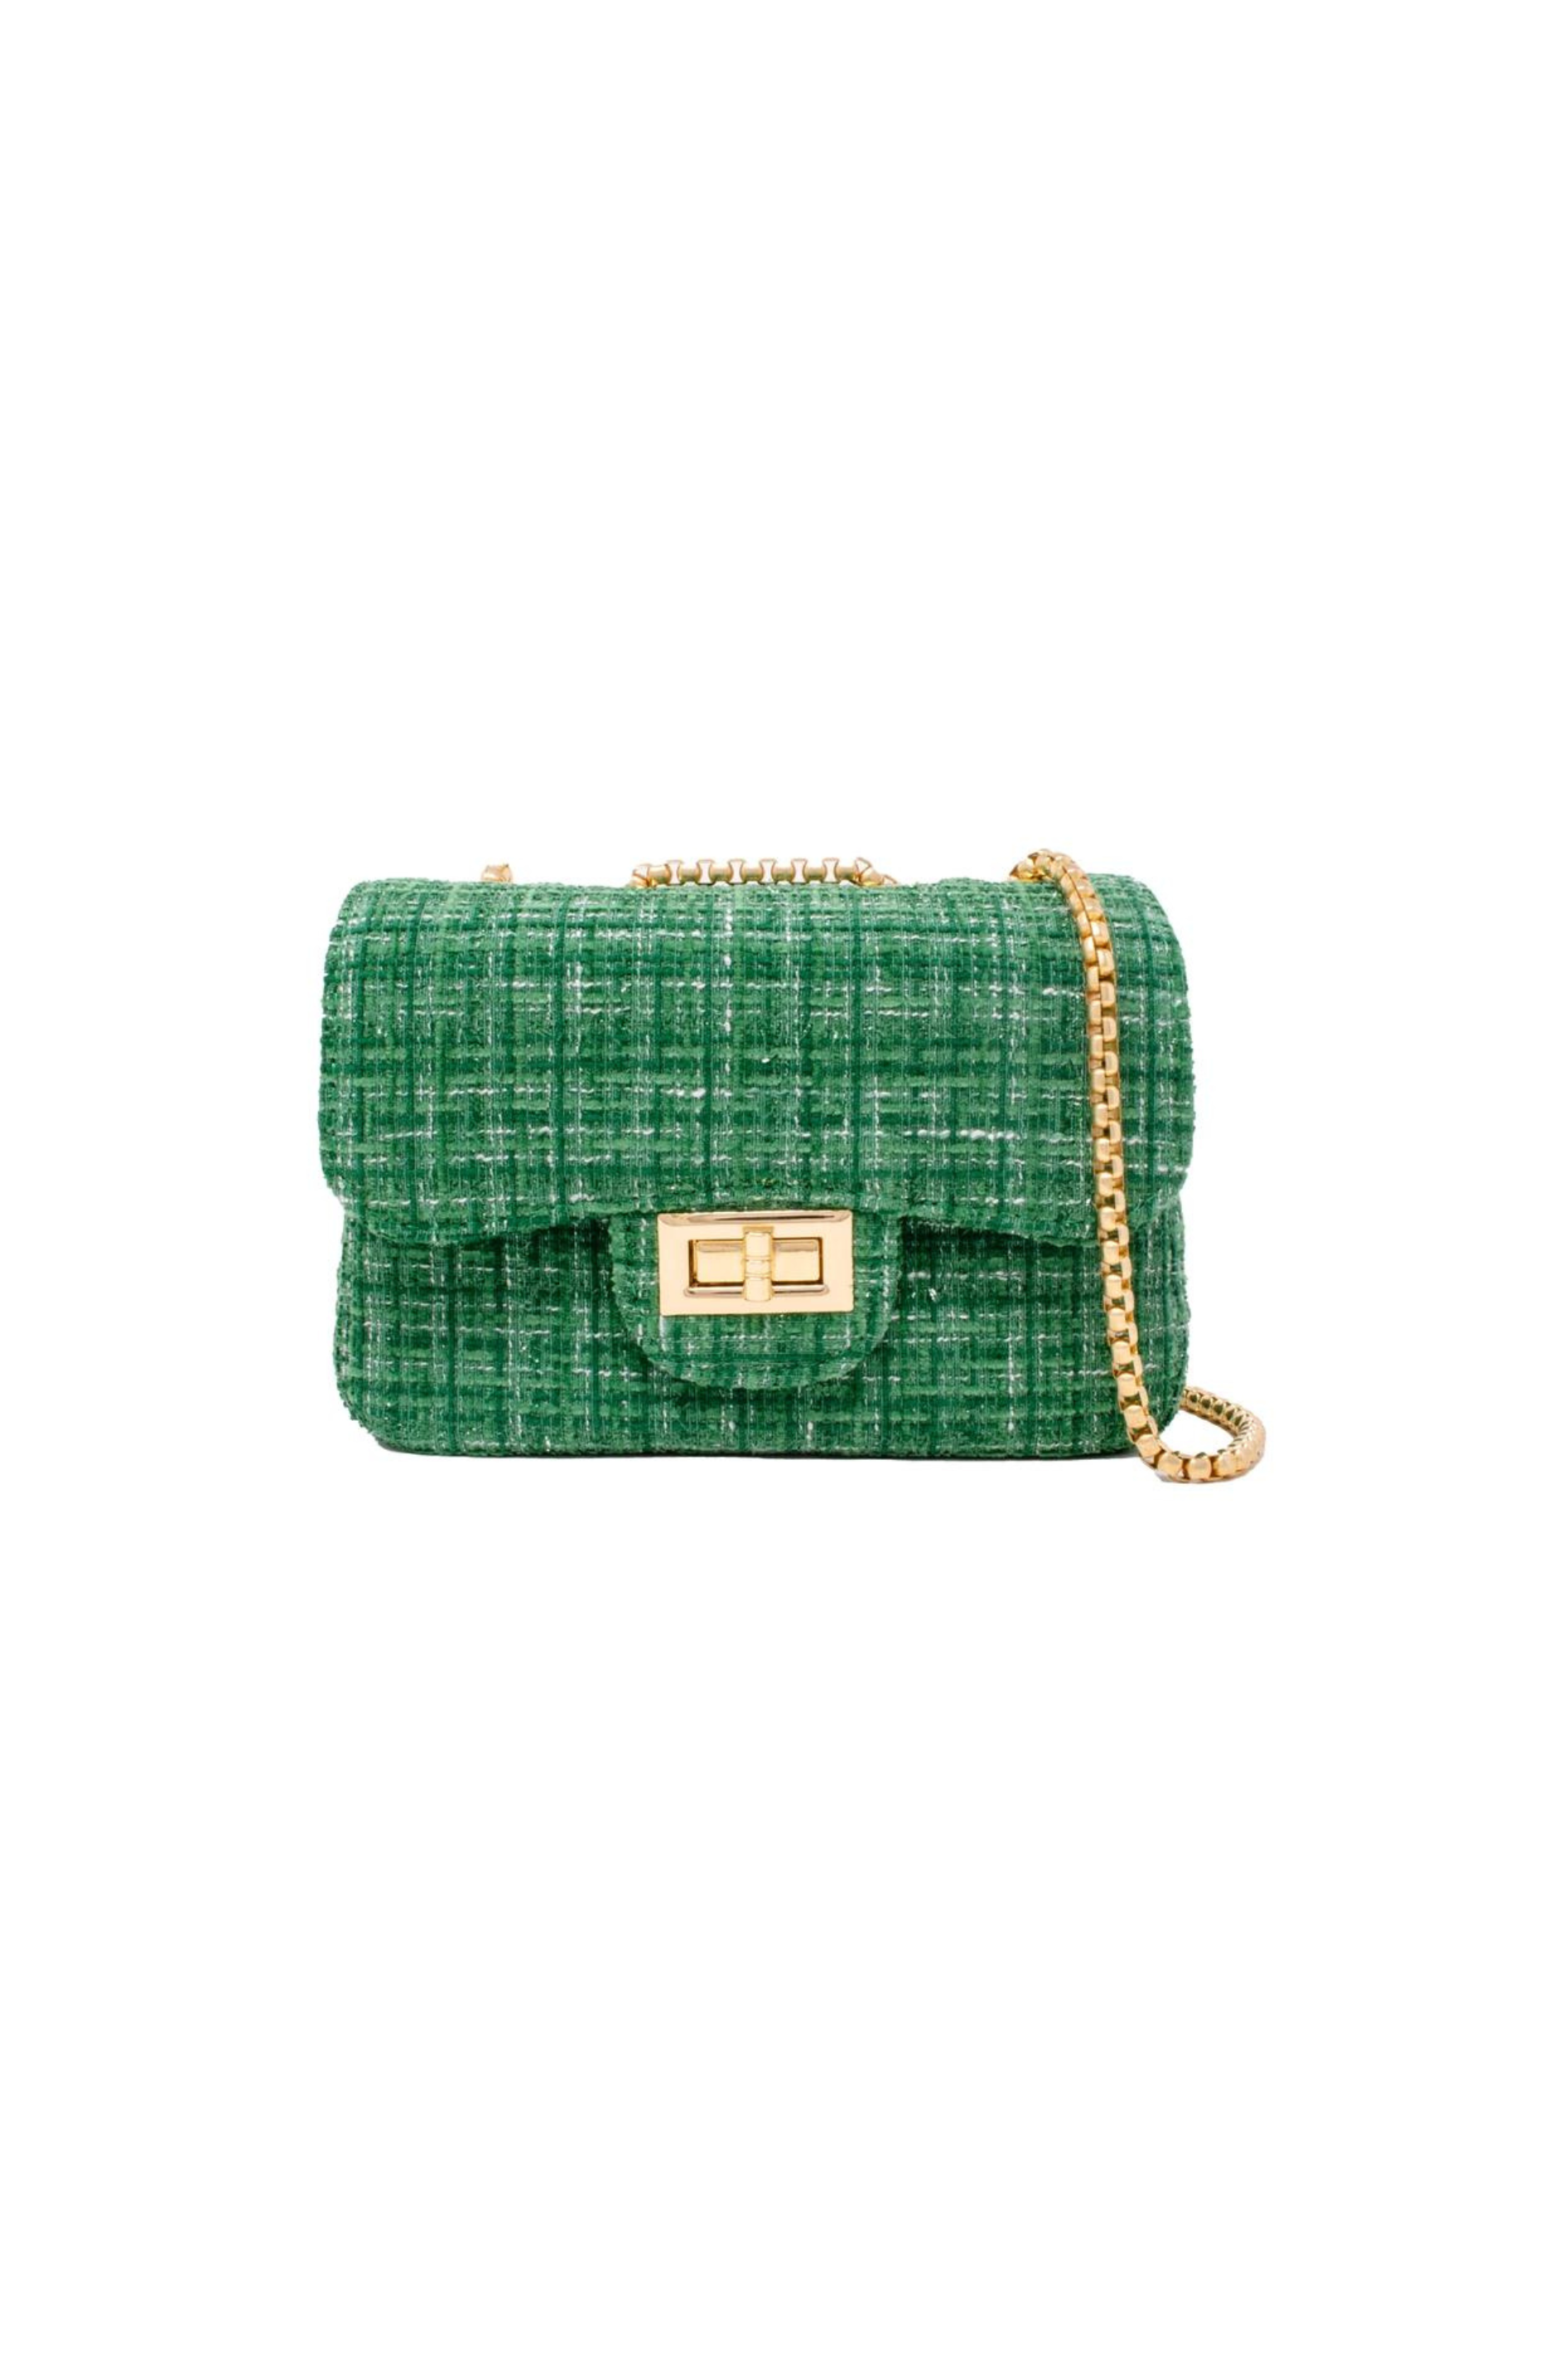 Chanel Timeless Handbag 368517